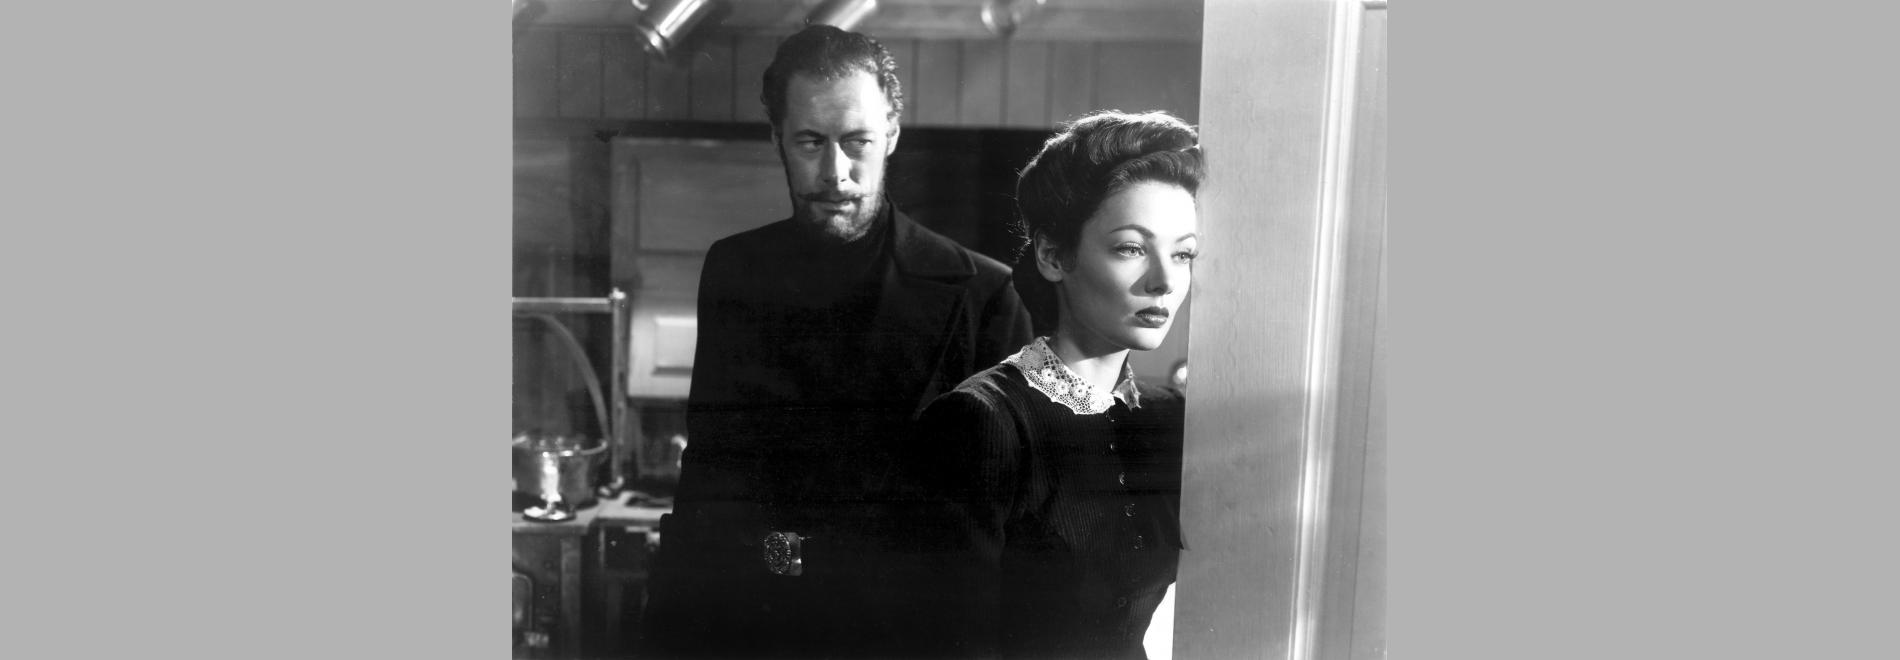 The Ghost and Mrs. Muir (Joseph L. Manciewicz, 1947)